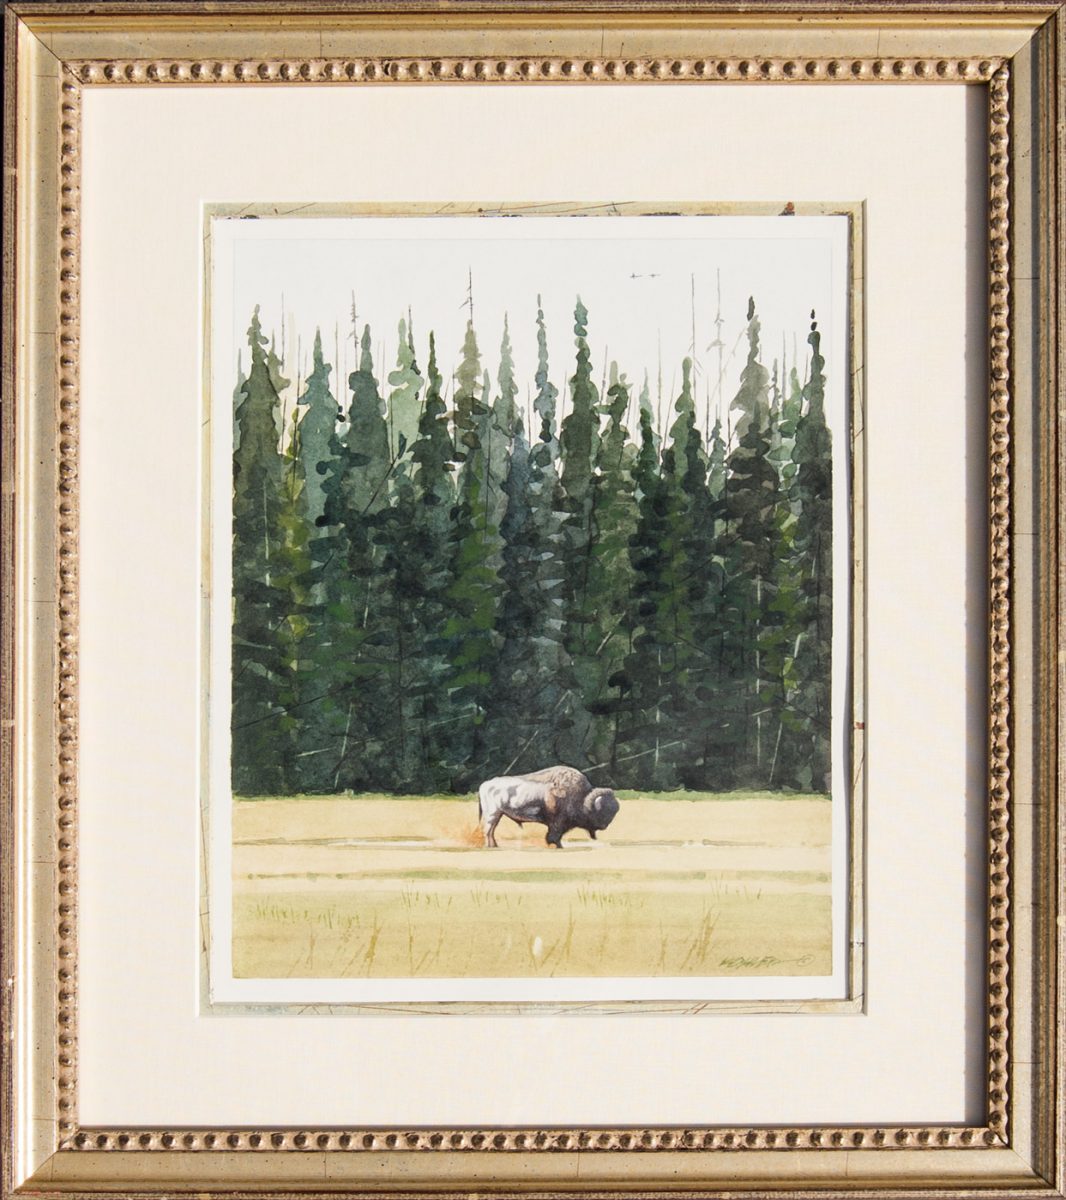 Watercolor painting of a buffalo by artist J Mark Kohler